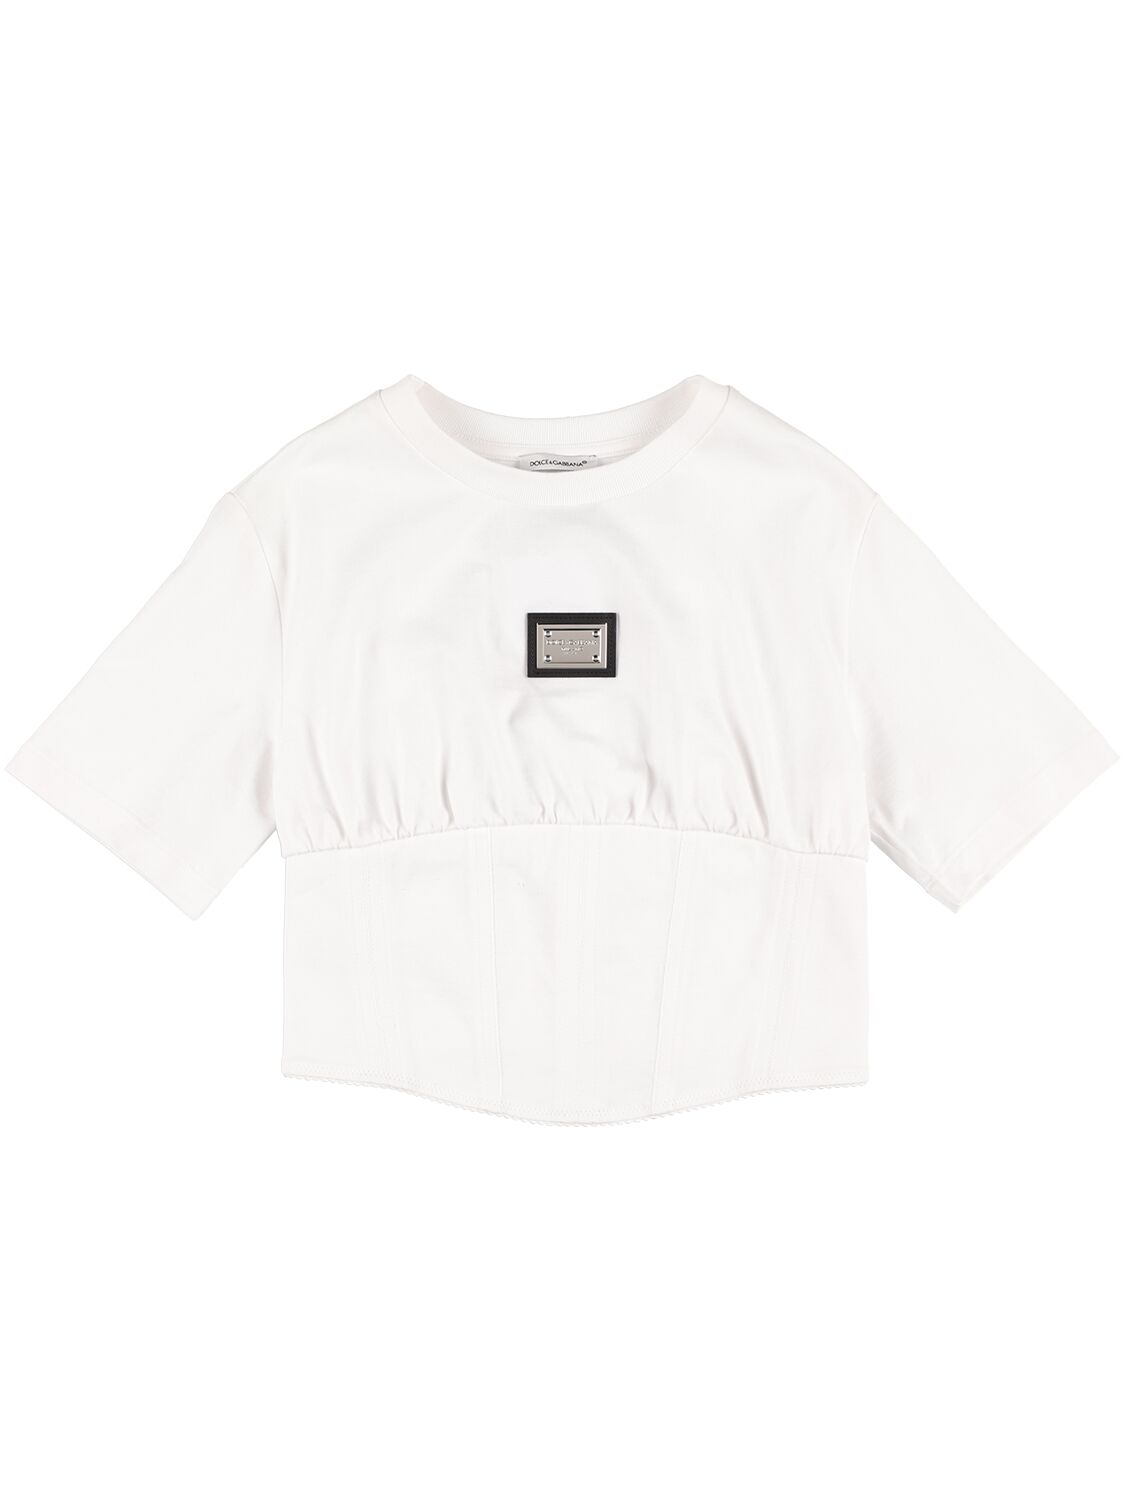 Image of Logo Print Cotton |t-shirt